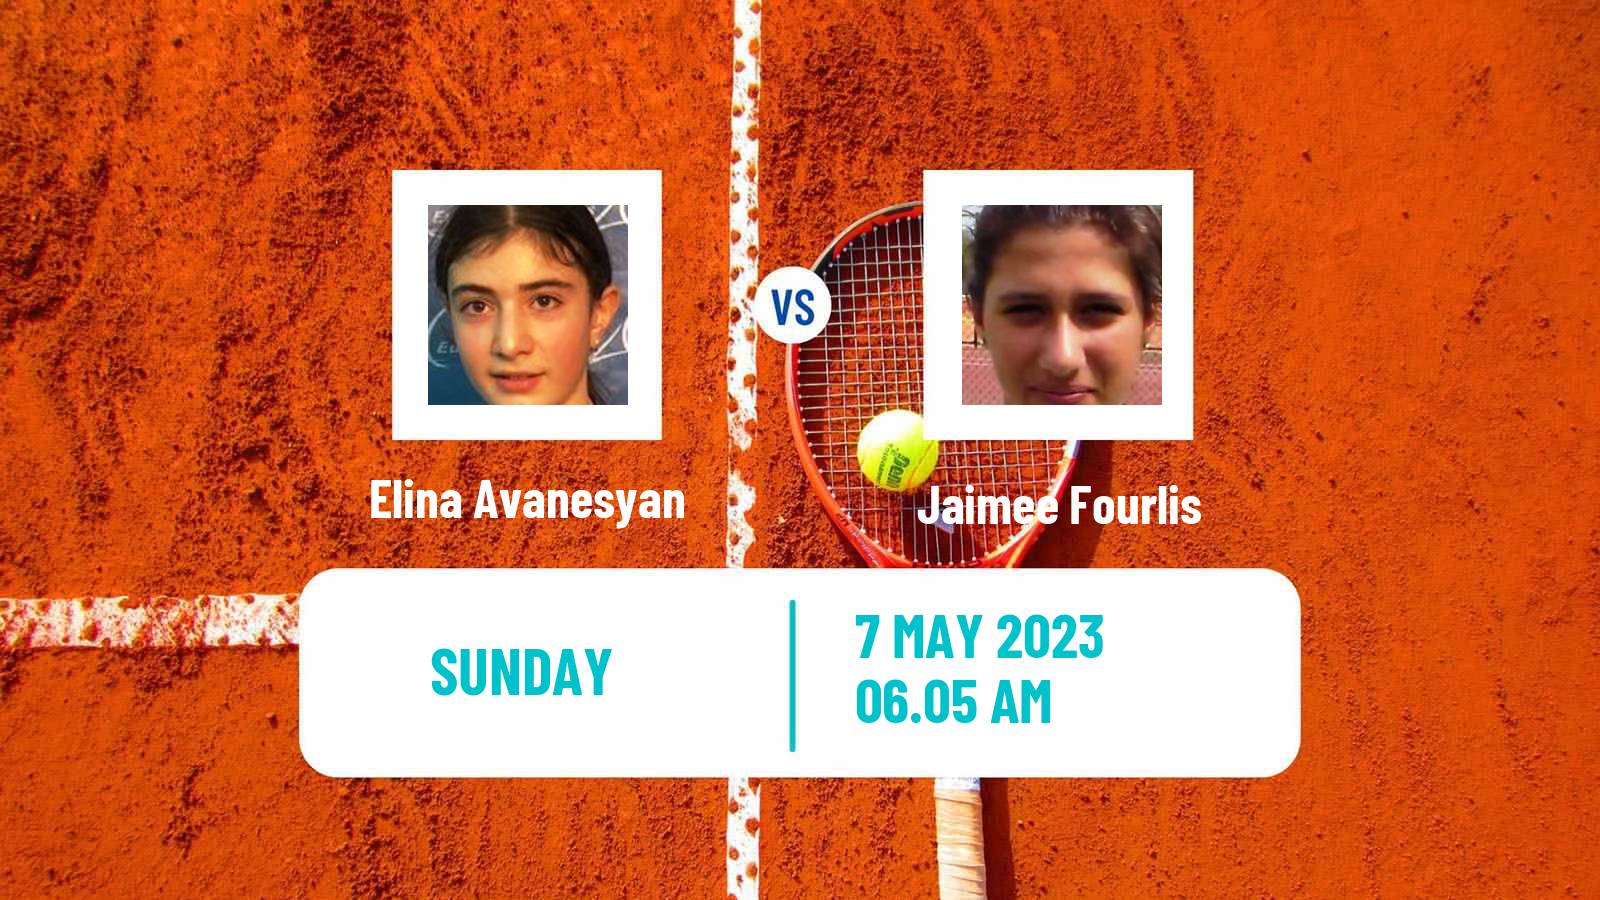 Tennis ITF Tournaments Elina Avanesyan - Jaimee Fourlis